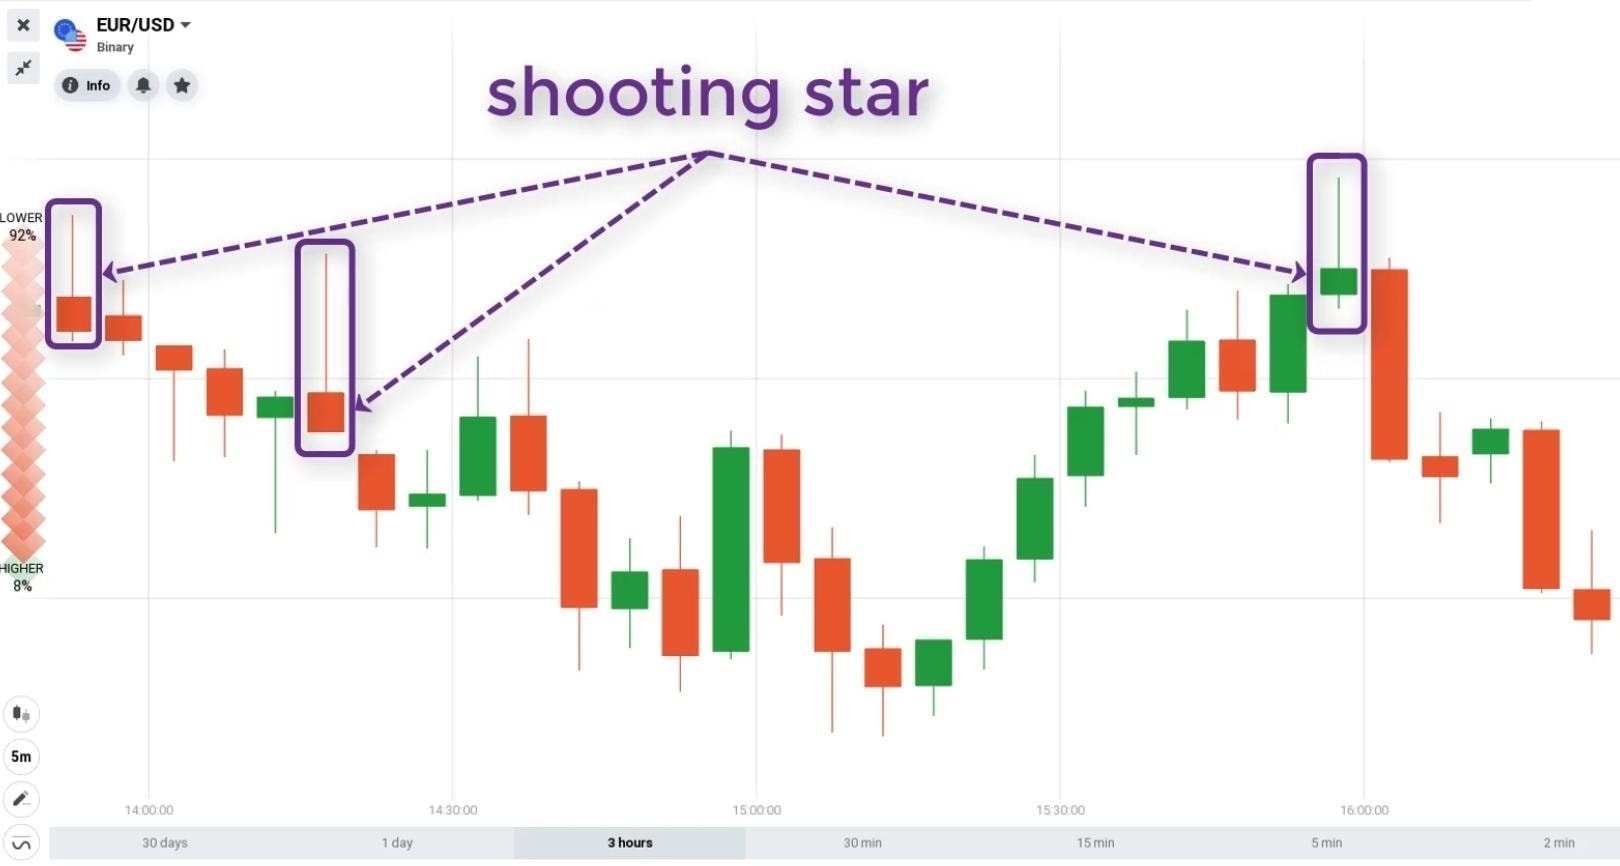 The Shooting Star